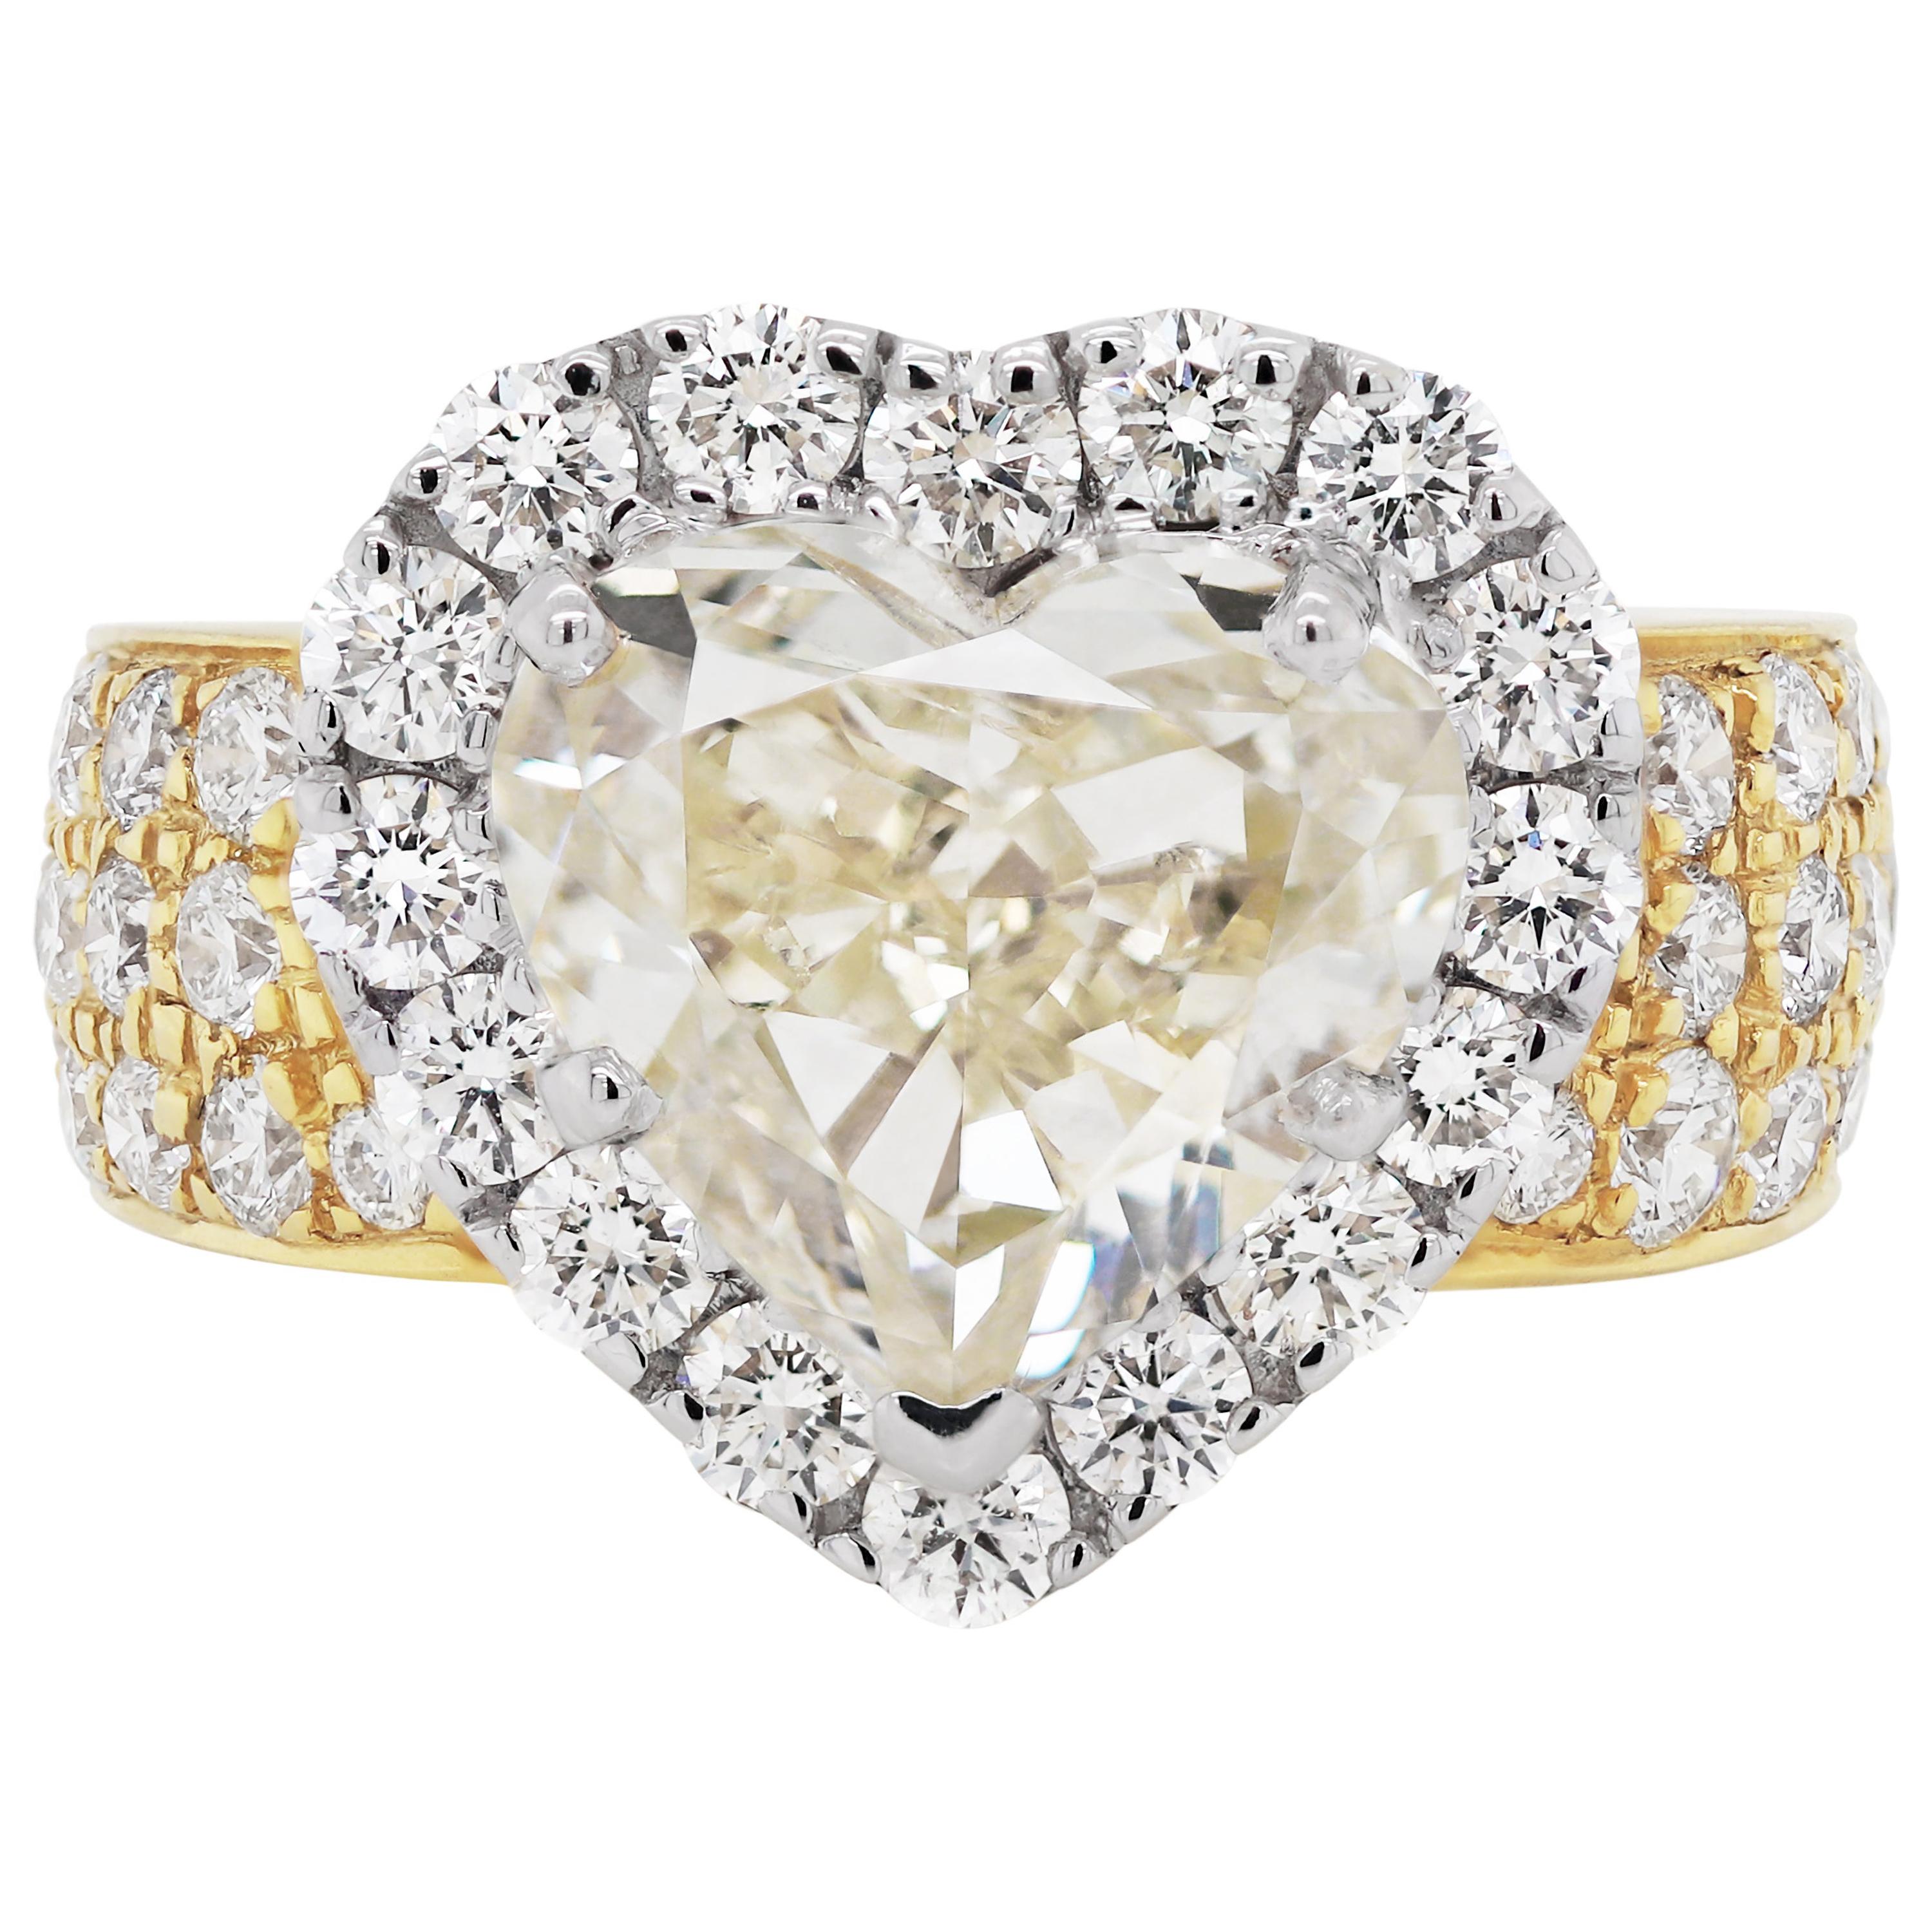 5.01 Carat Heart Shape Diamond 18 Carat Gold Engagement Ring